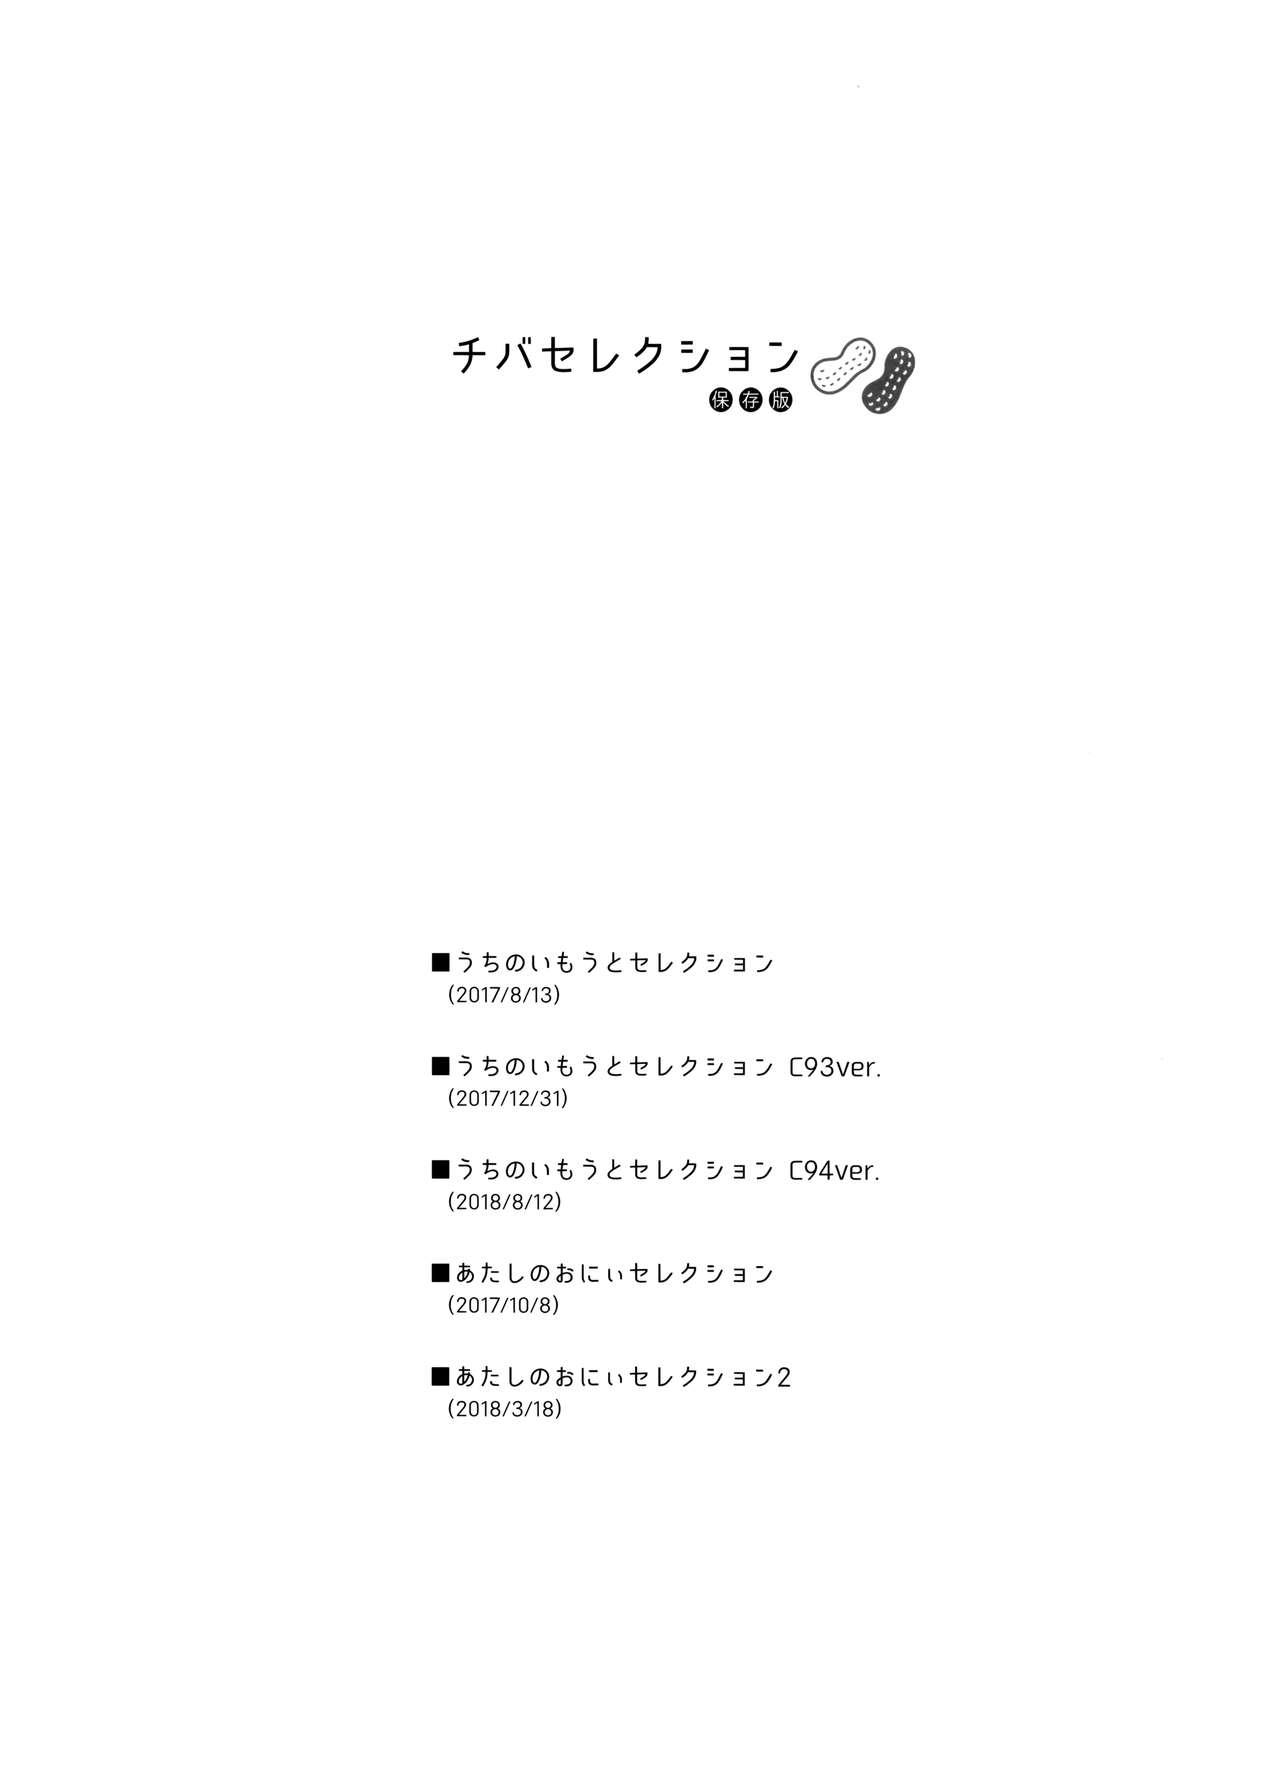 Anale Chiba Selection Hozonban - Qualidea code Gayhardcore - Page 3